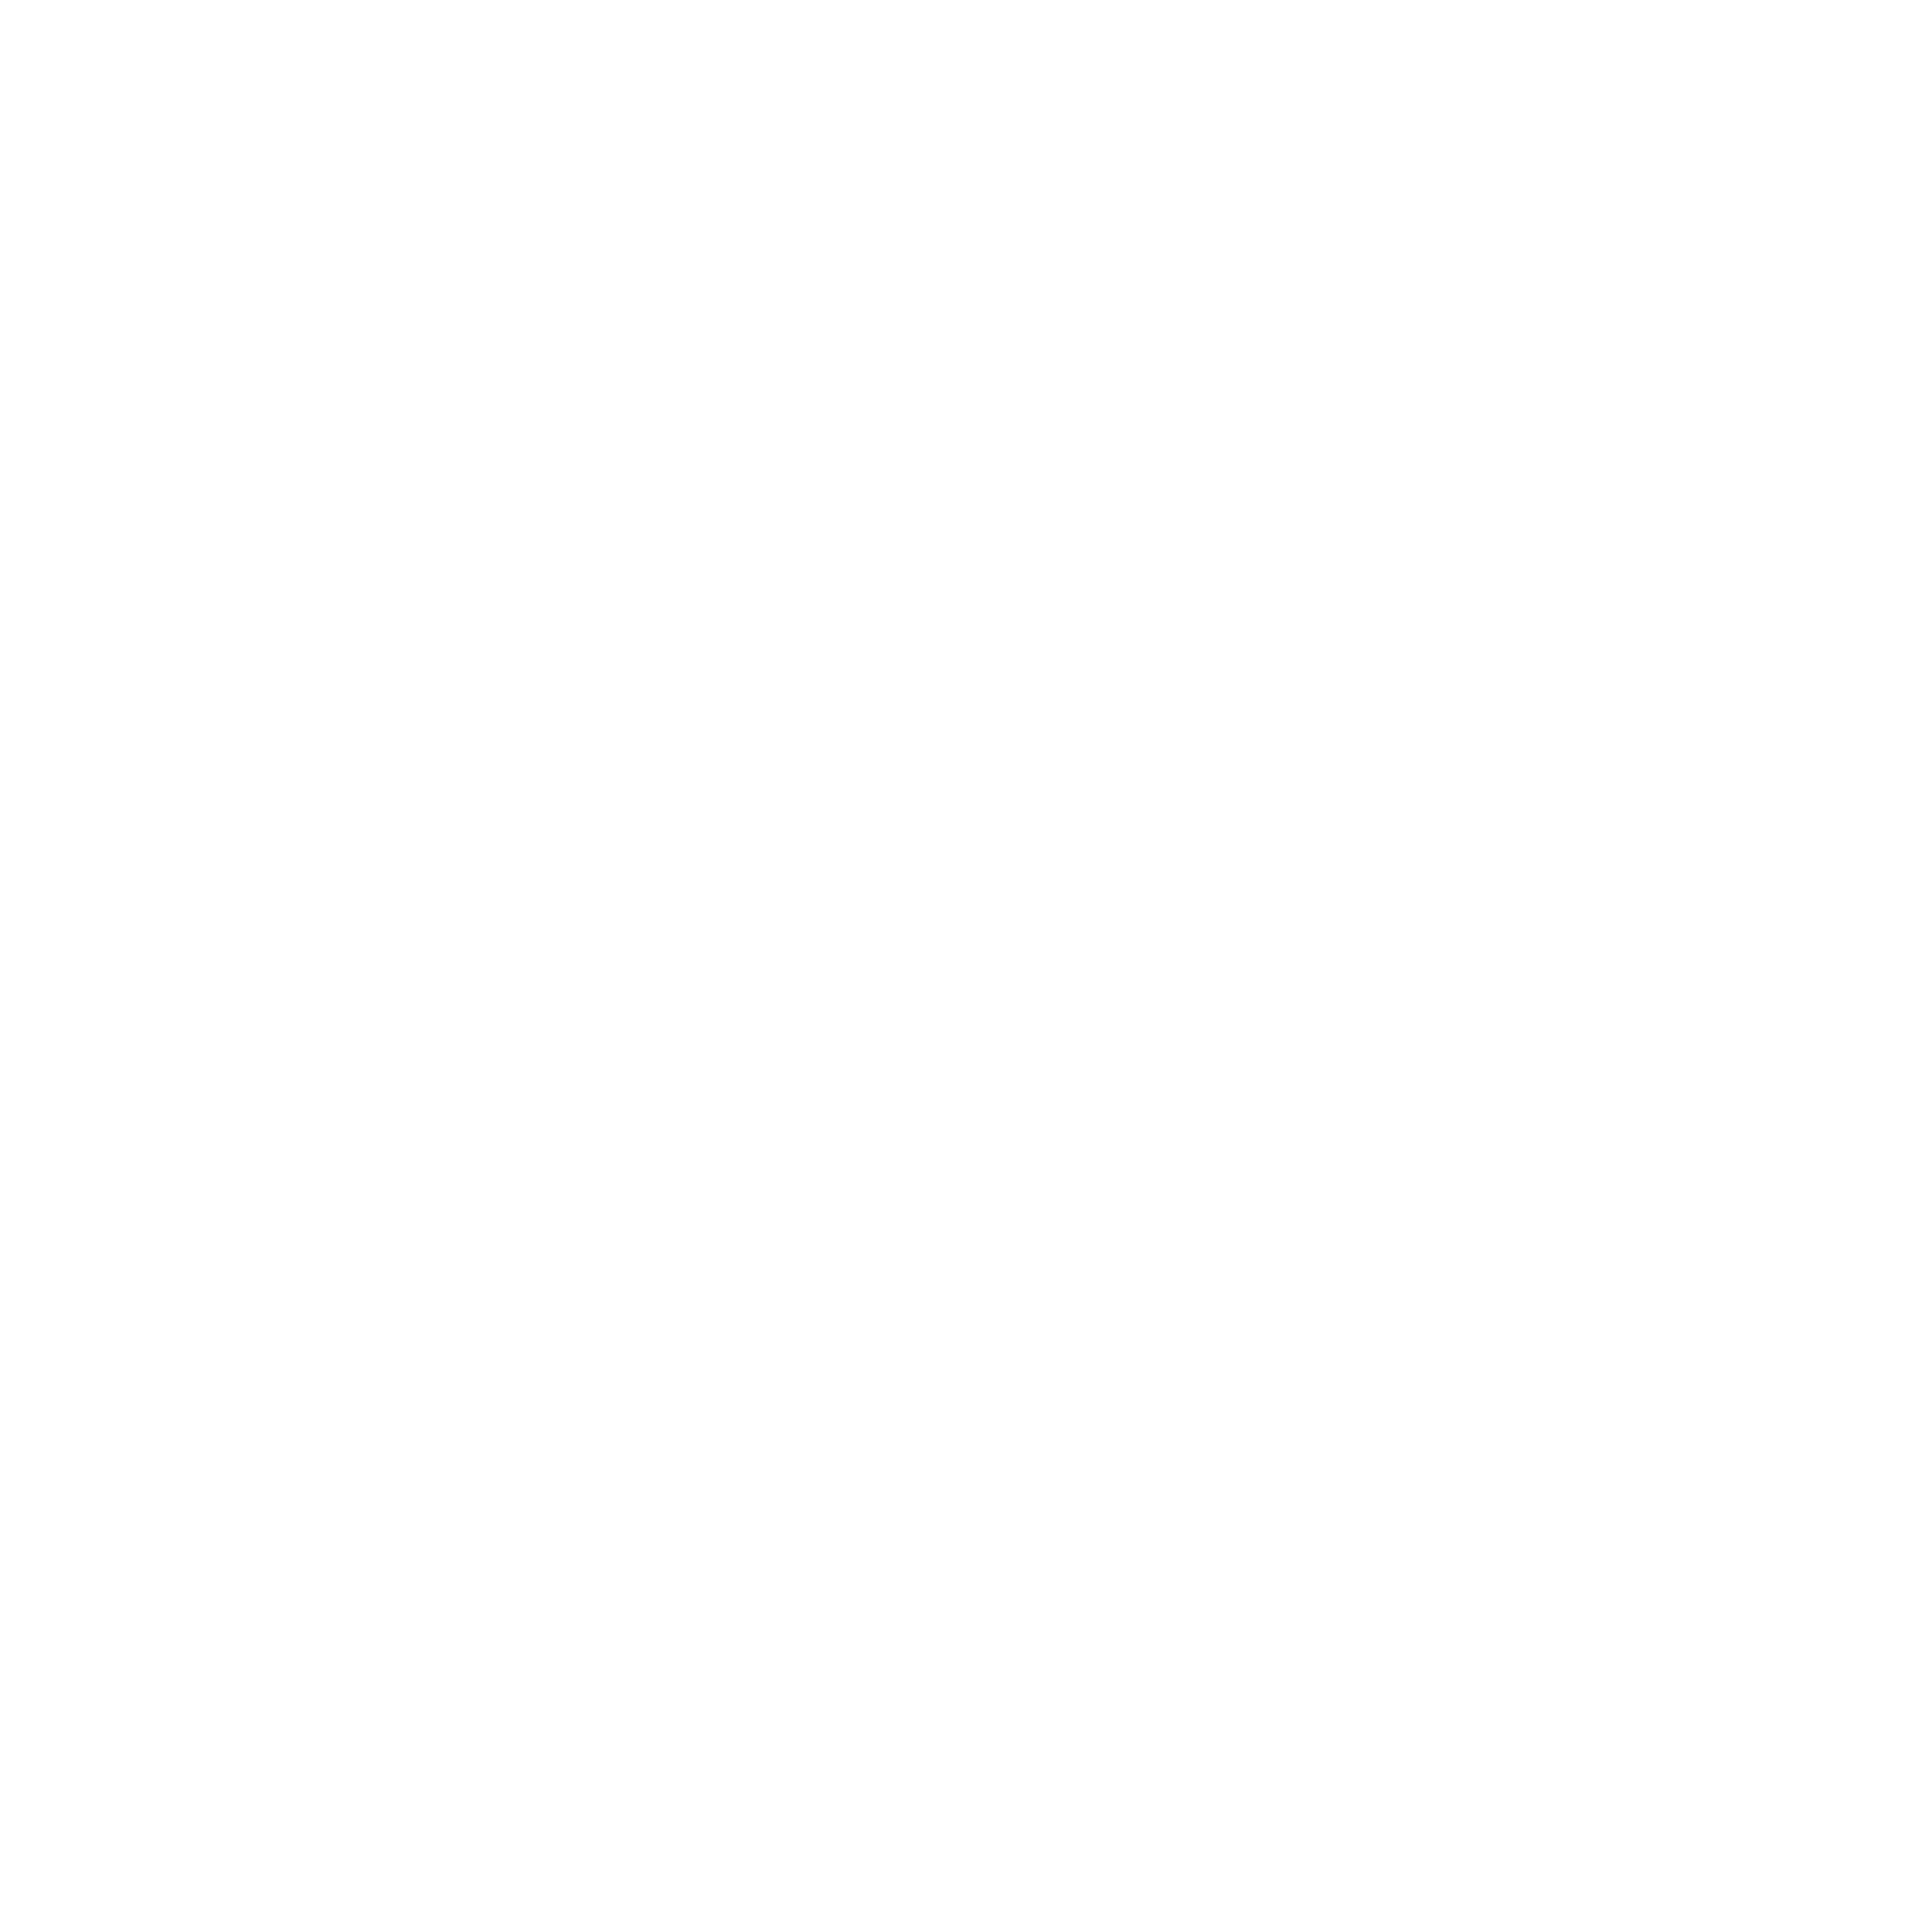 NISSAN-1